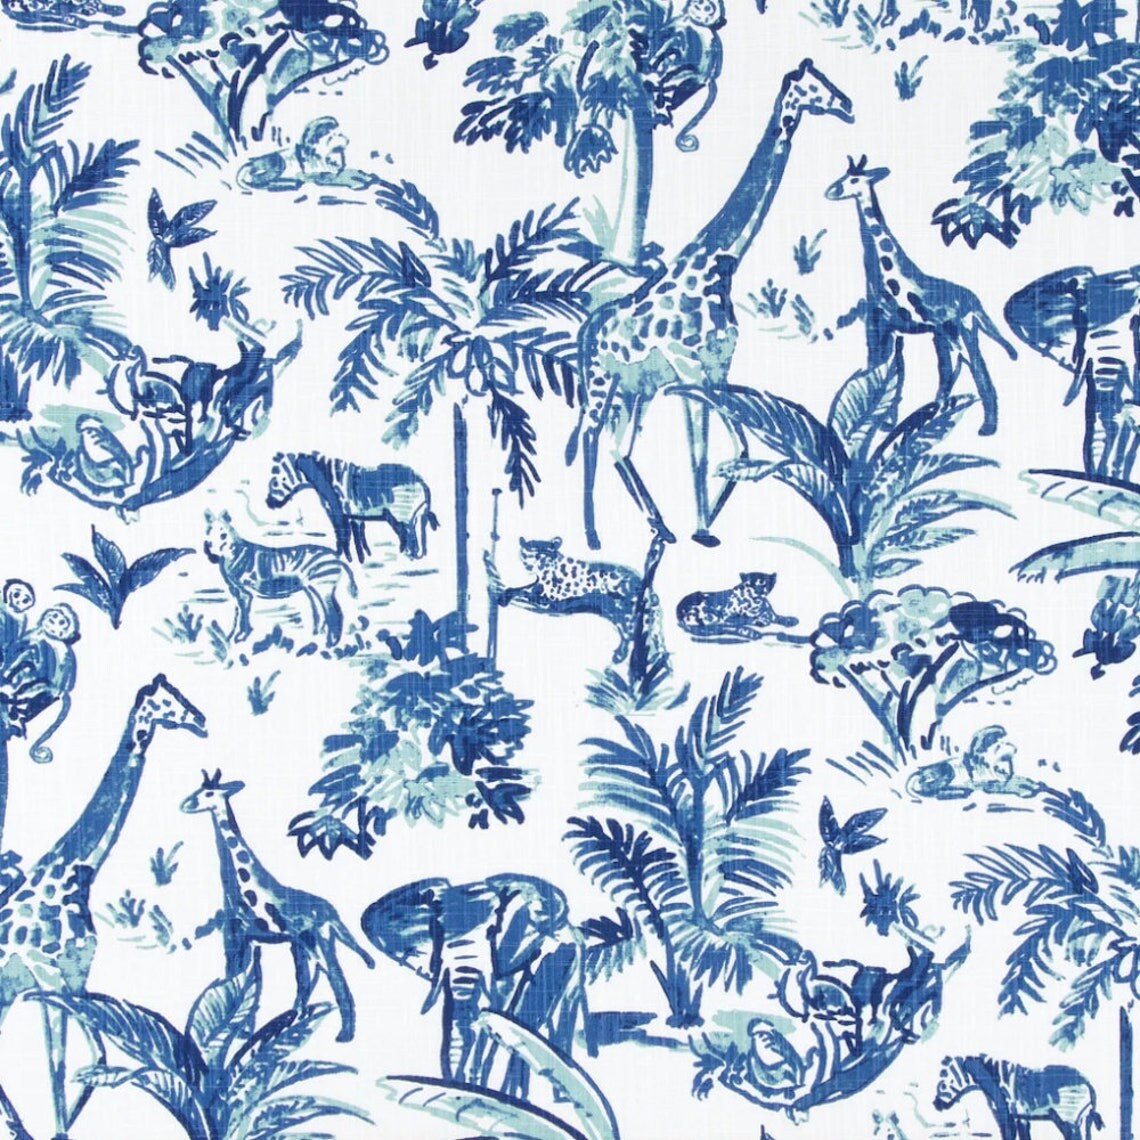 pinch pleated curtains in meru commodore blue, cancun blue safari animal toile